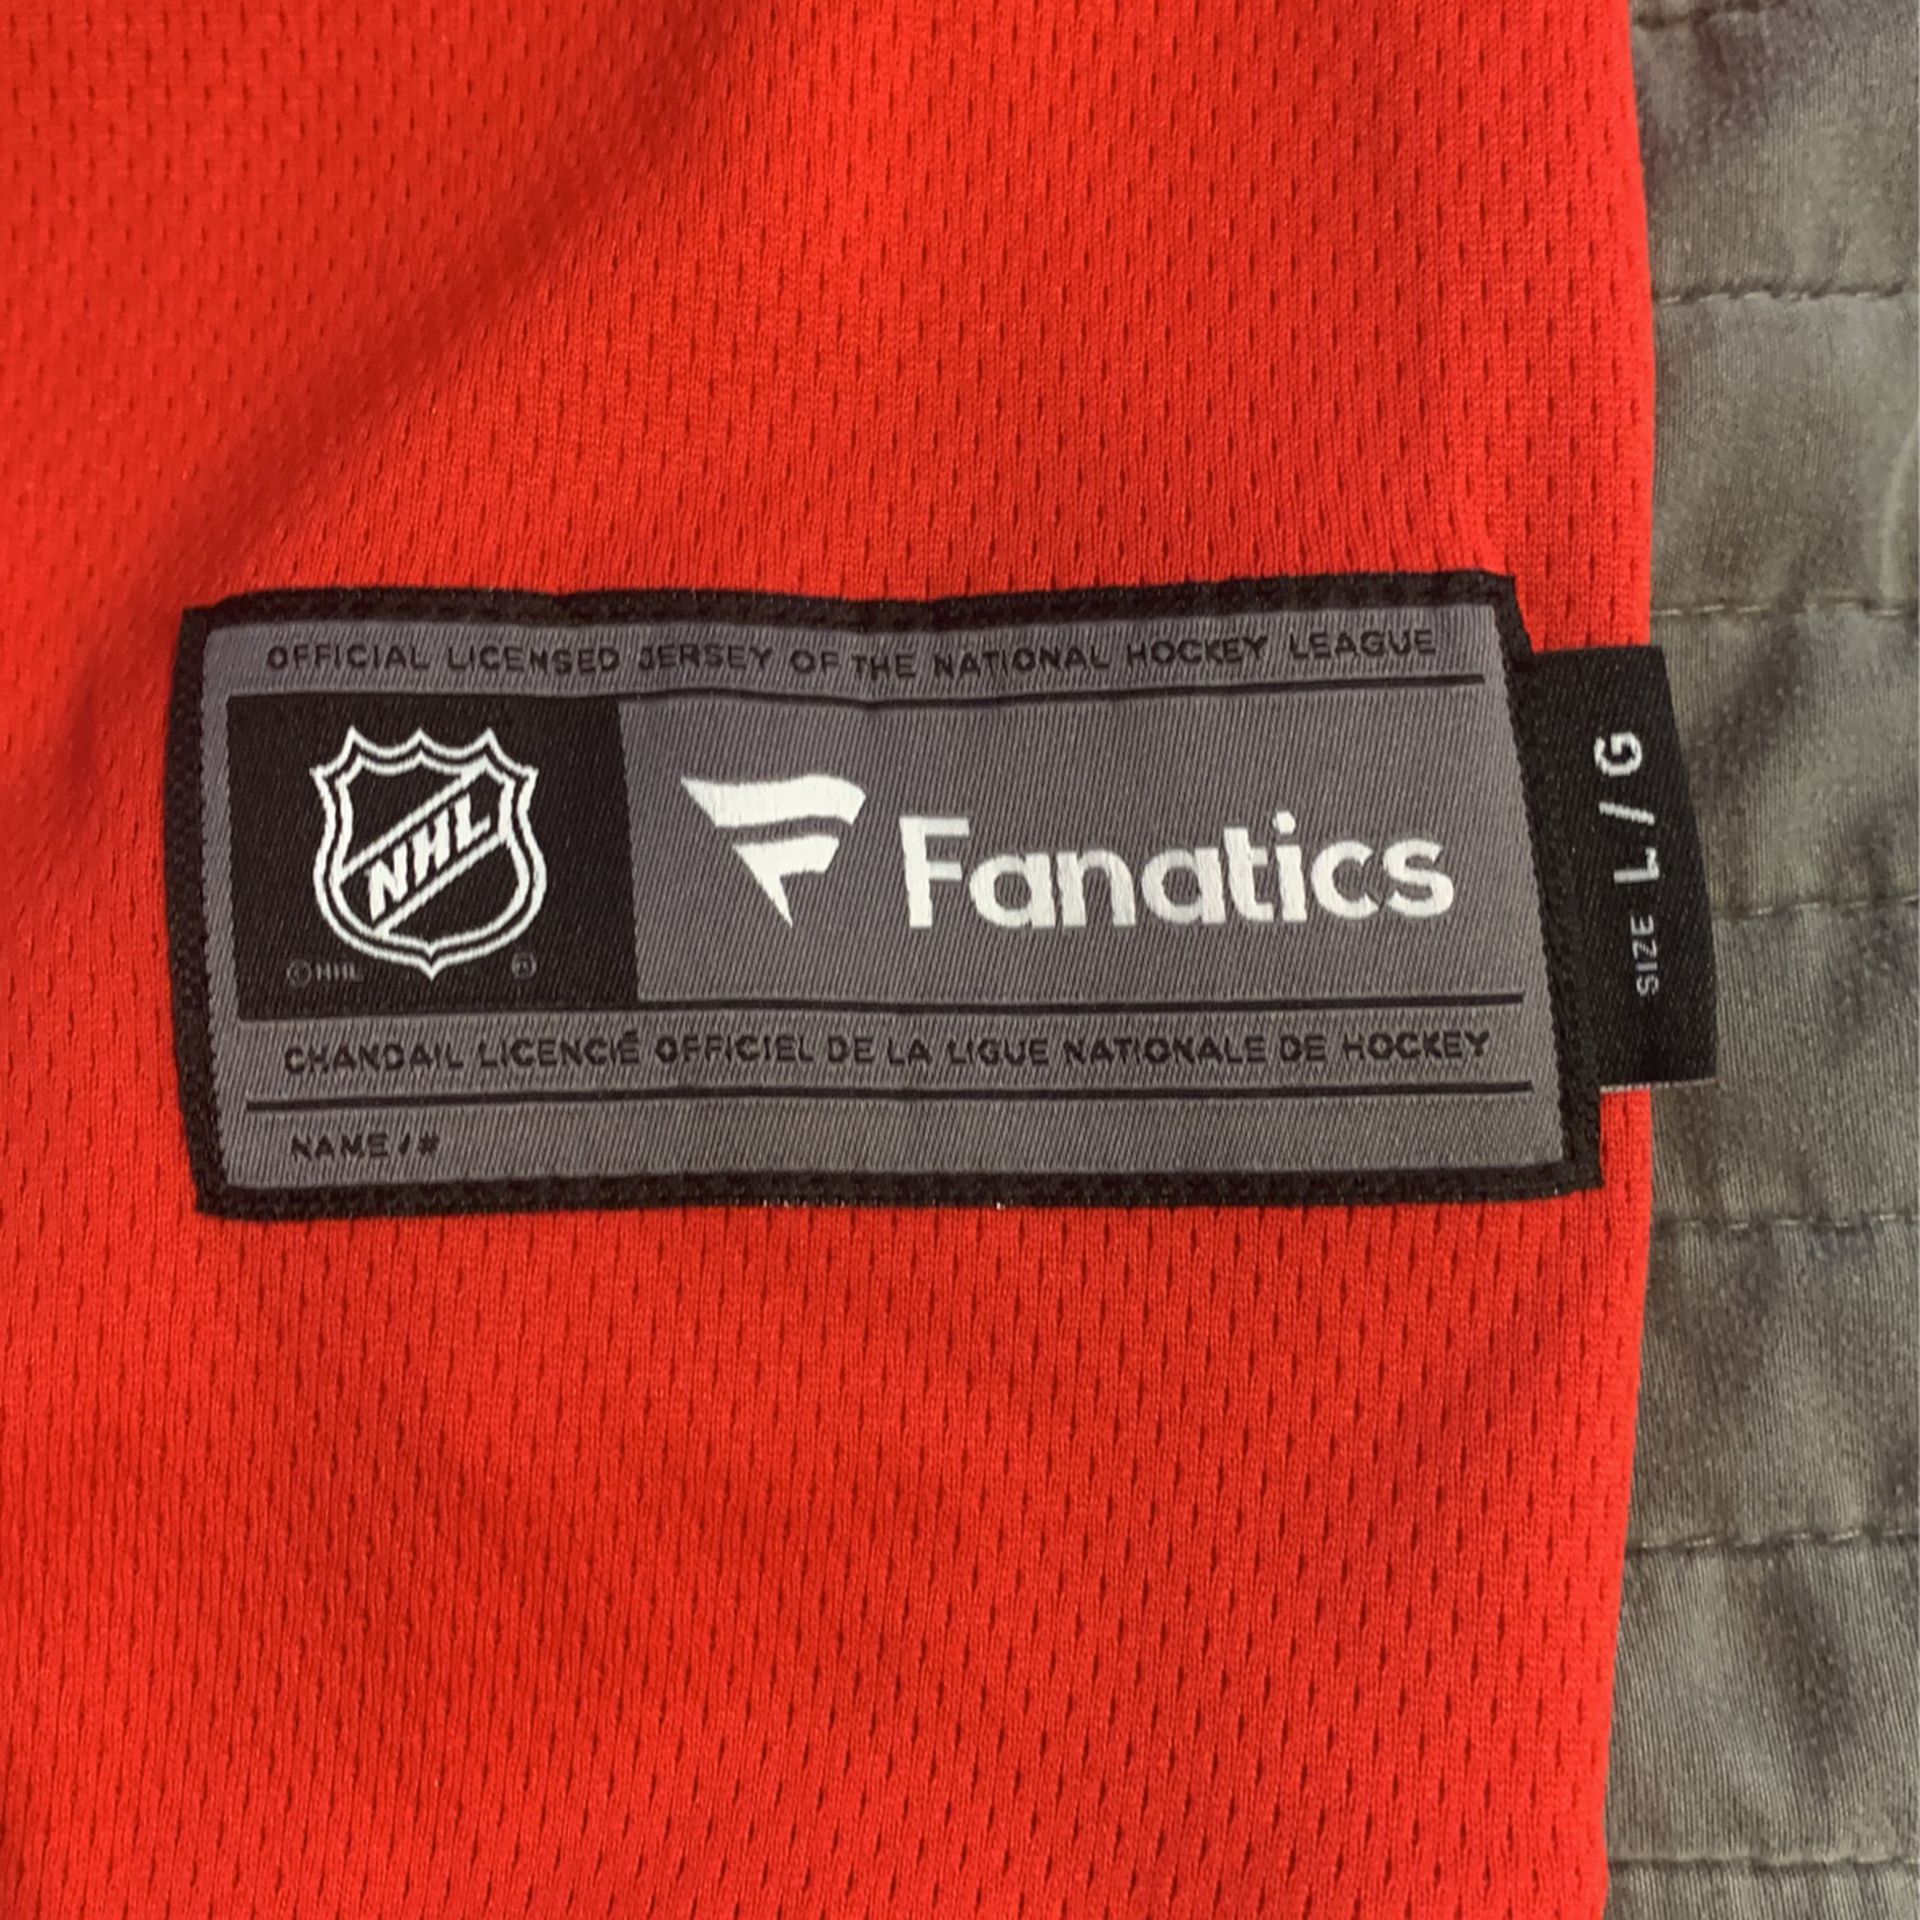 Panthers fan shop selling an MiC barkov jersey for $320 amongst a